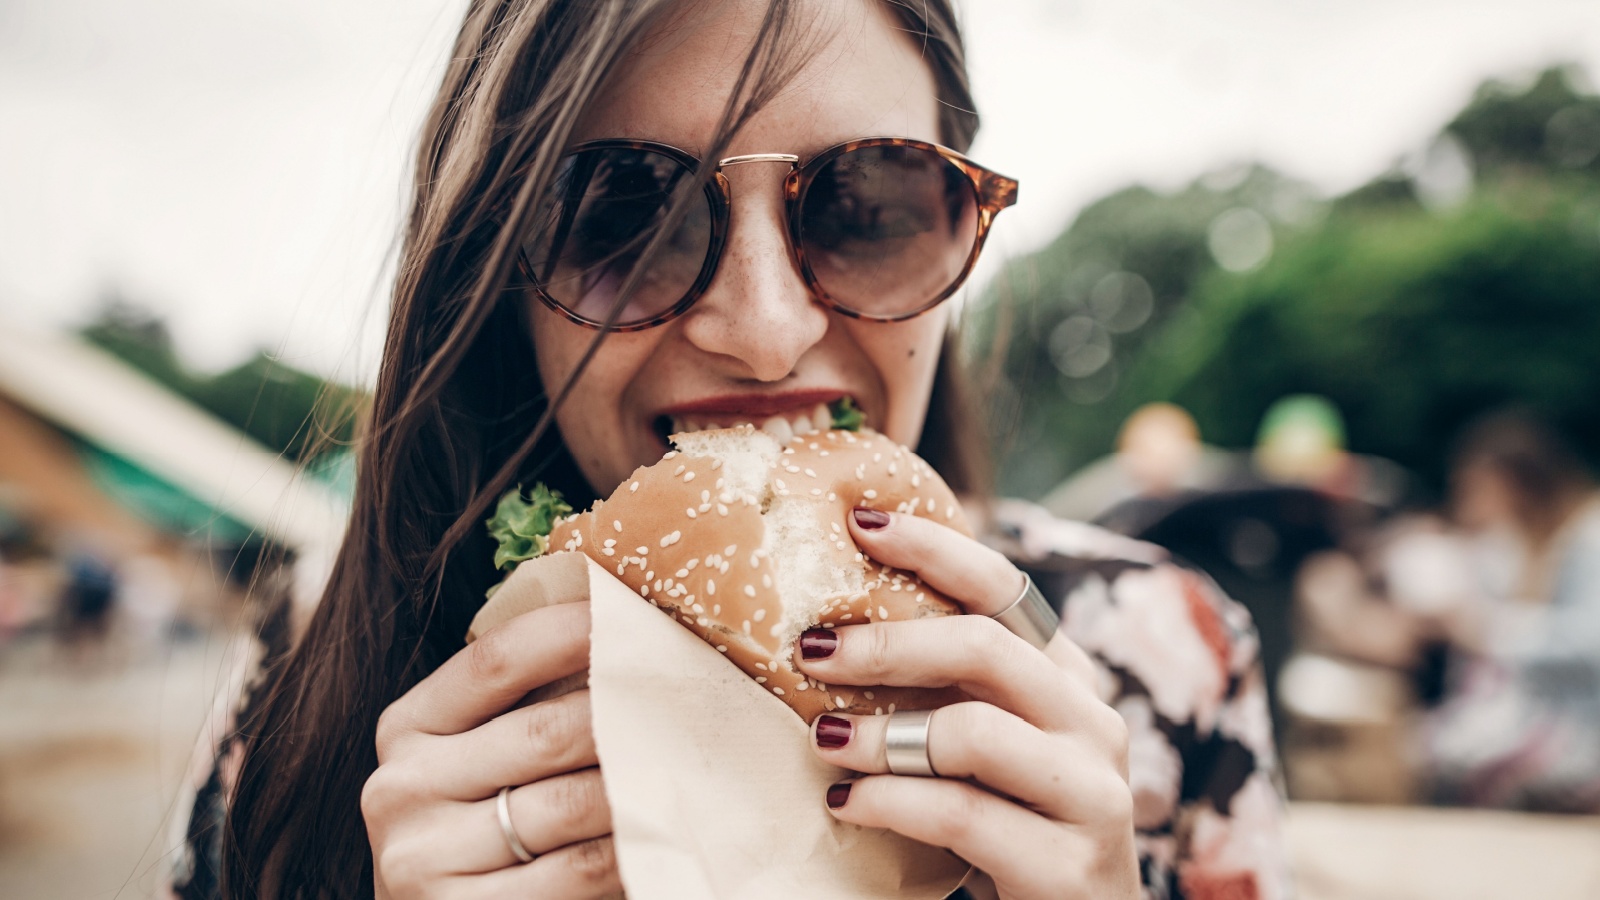 stylish hipster woman eating juicy burger. boho girl biting yummy cheeseburger, smiling at street food festival. summertime. summer vacation travel picnic.